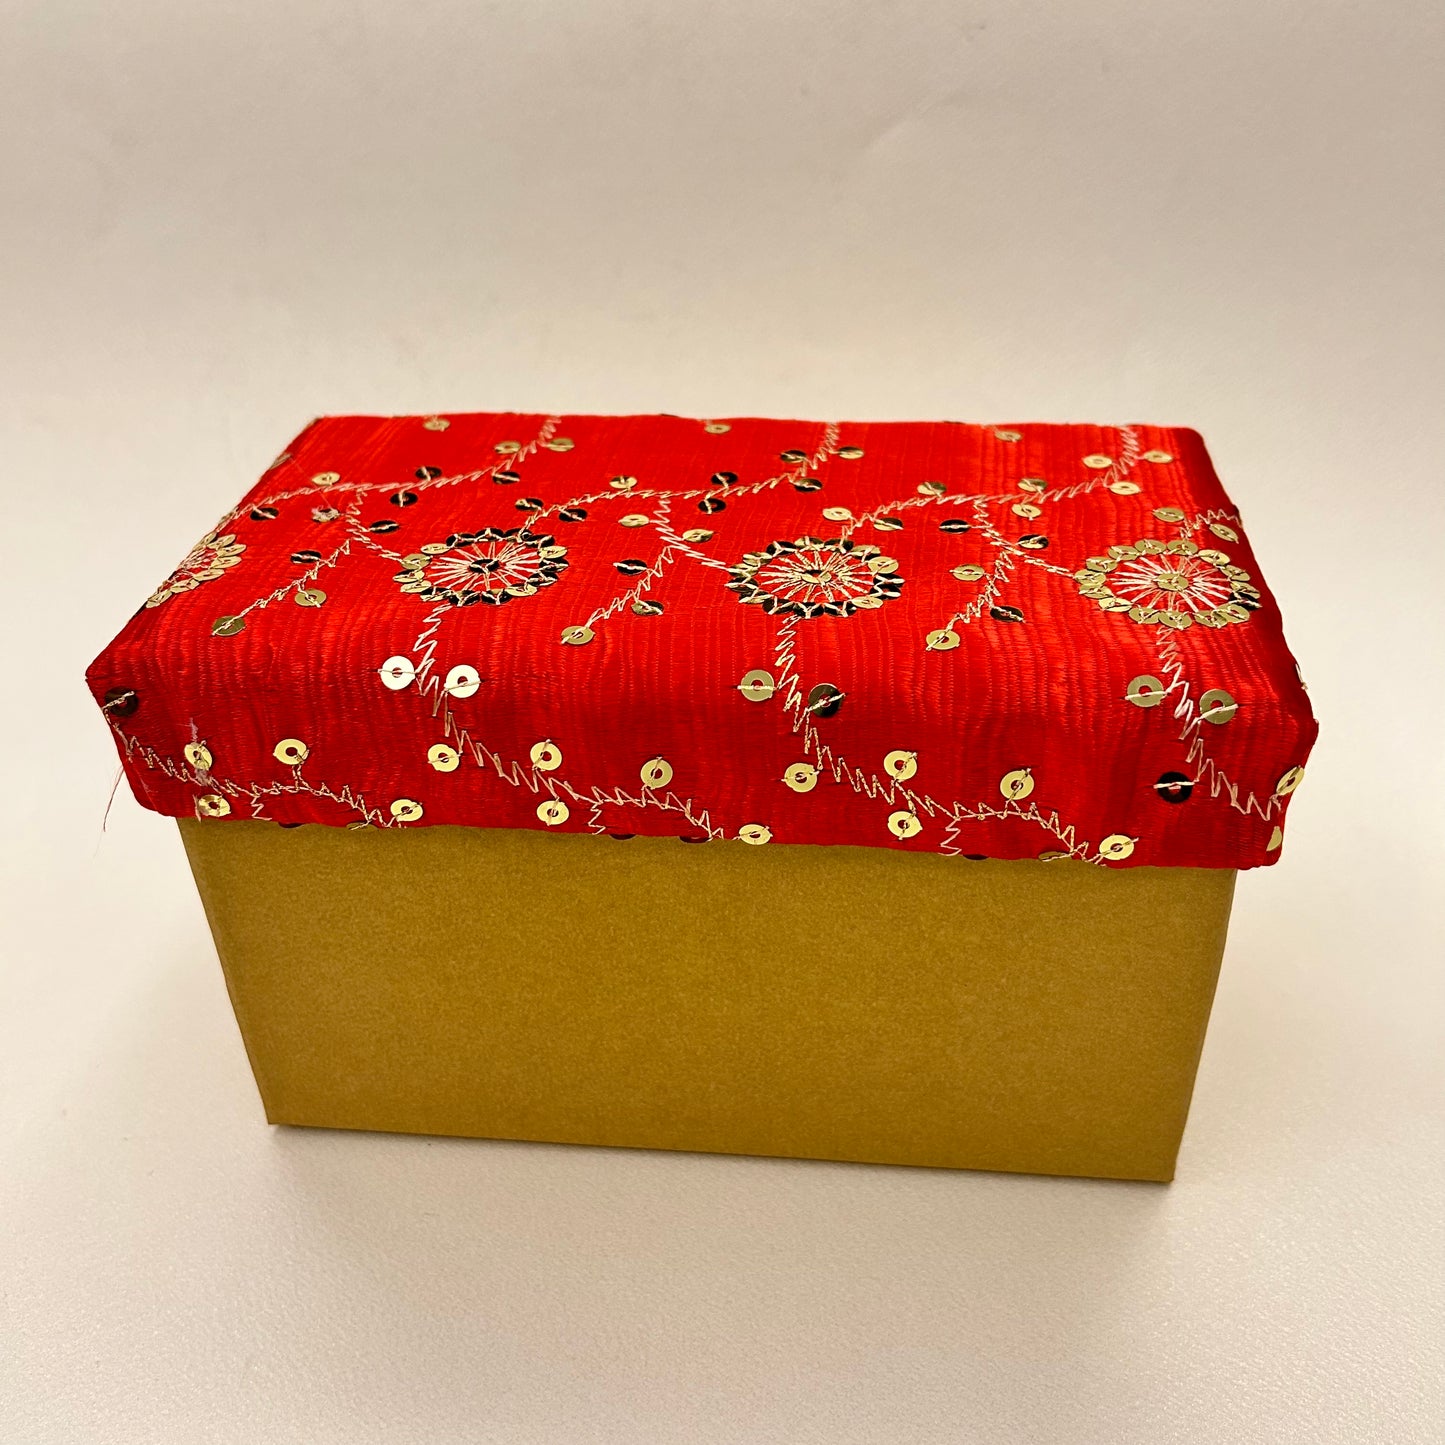 Gift Box - Rectangular Tall